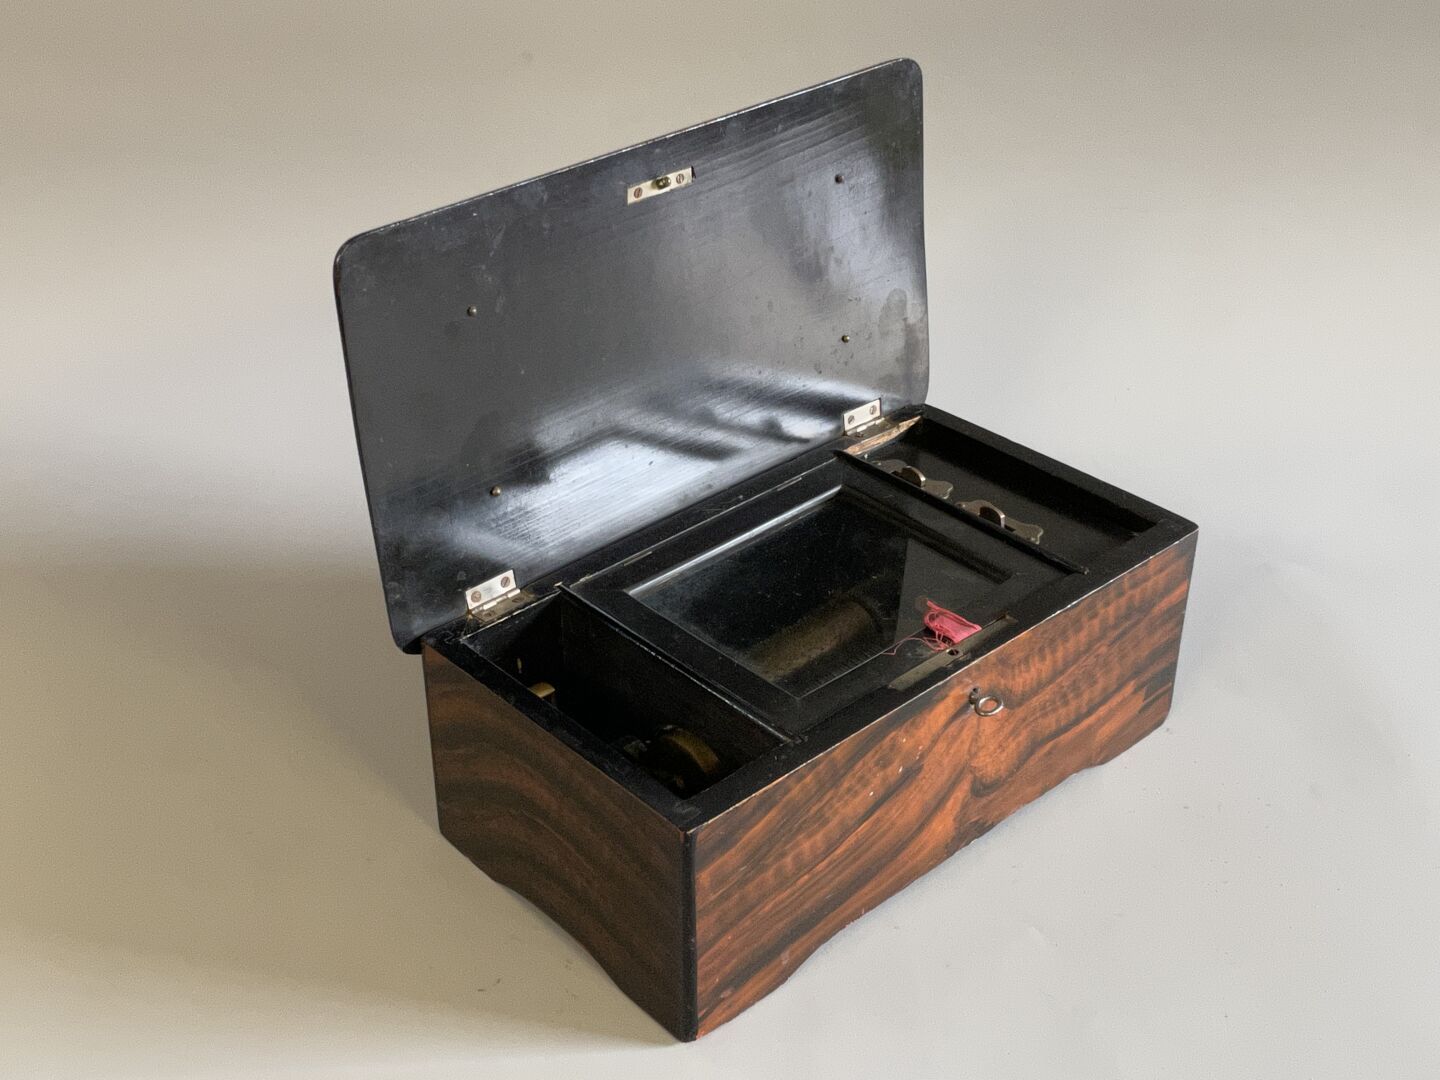 Null 有两种曲调的音乐盒。

19世纪晚期

12 x 30 x 17厘米。 

里面有一点缺失。